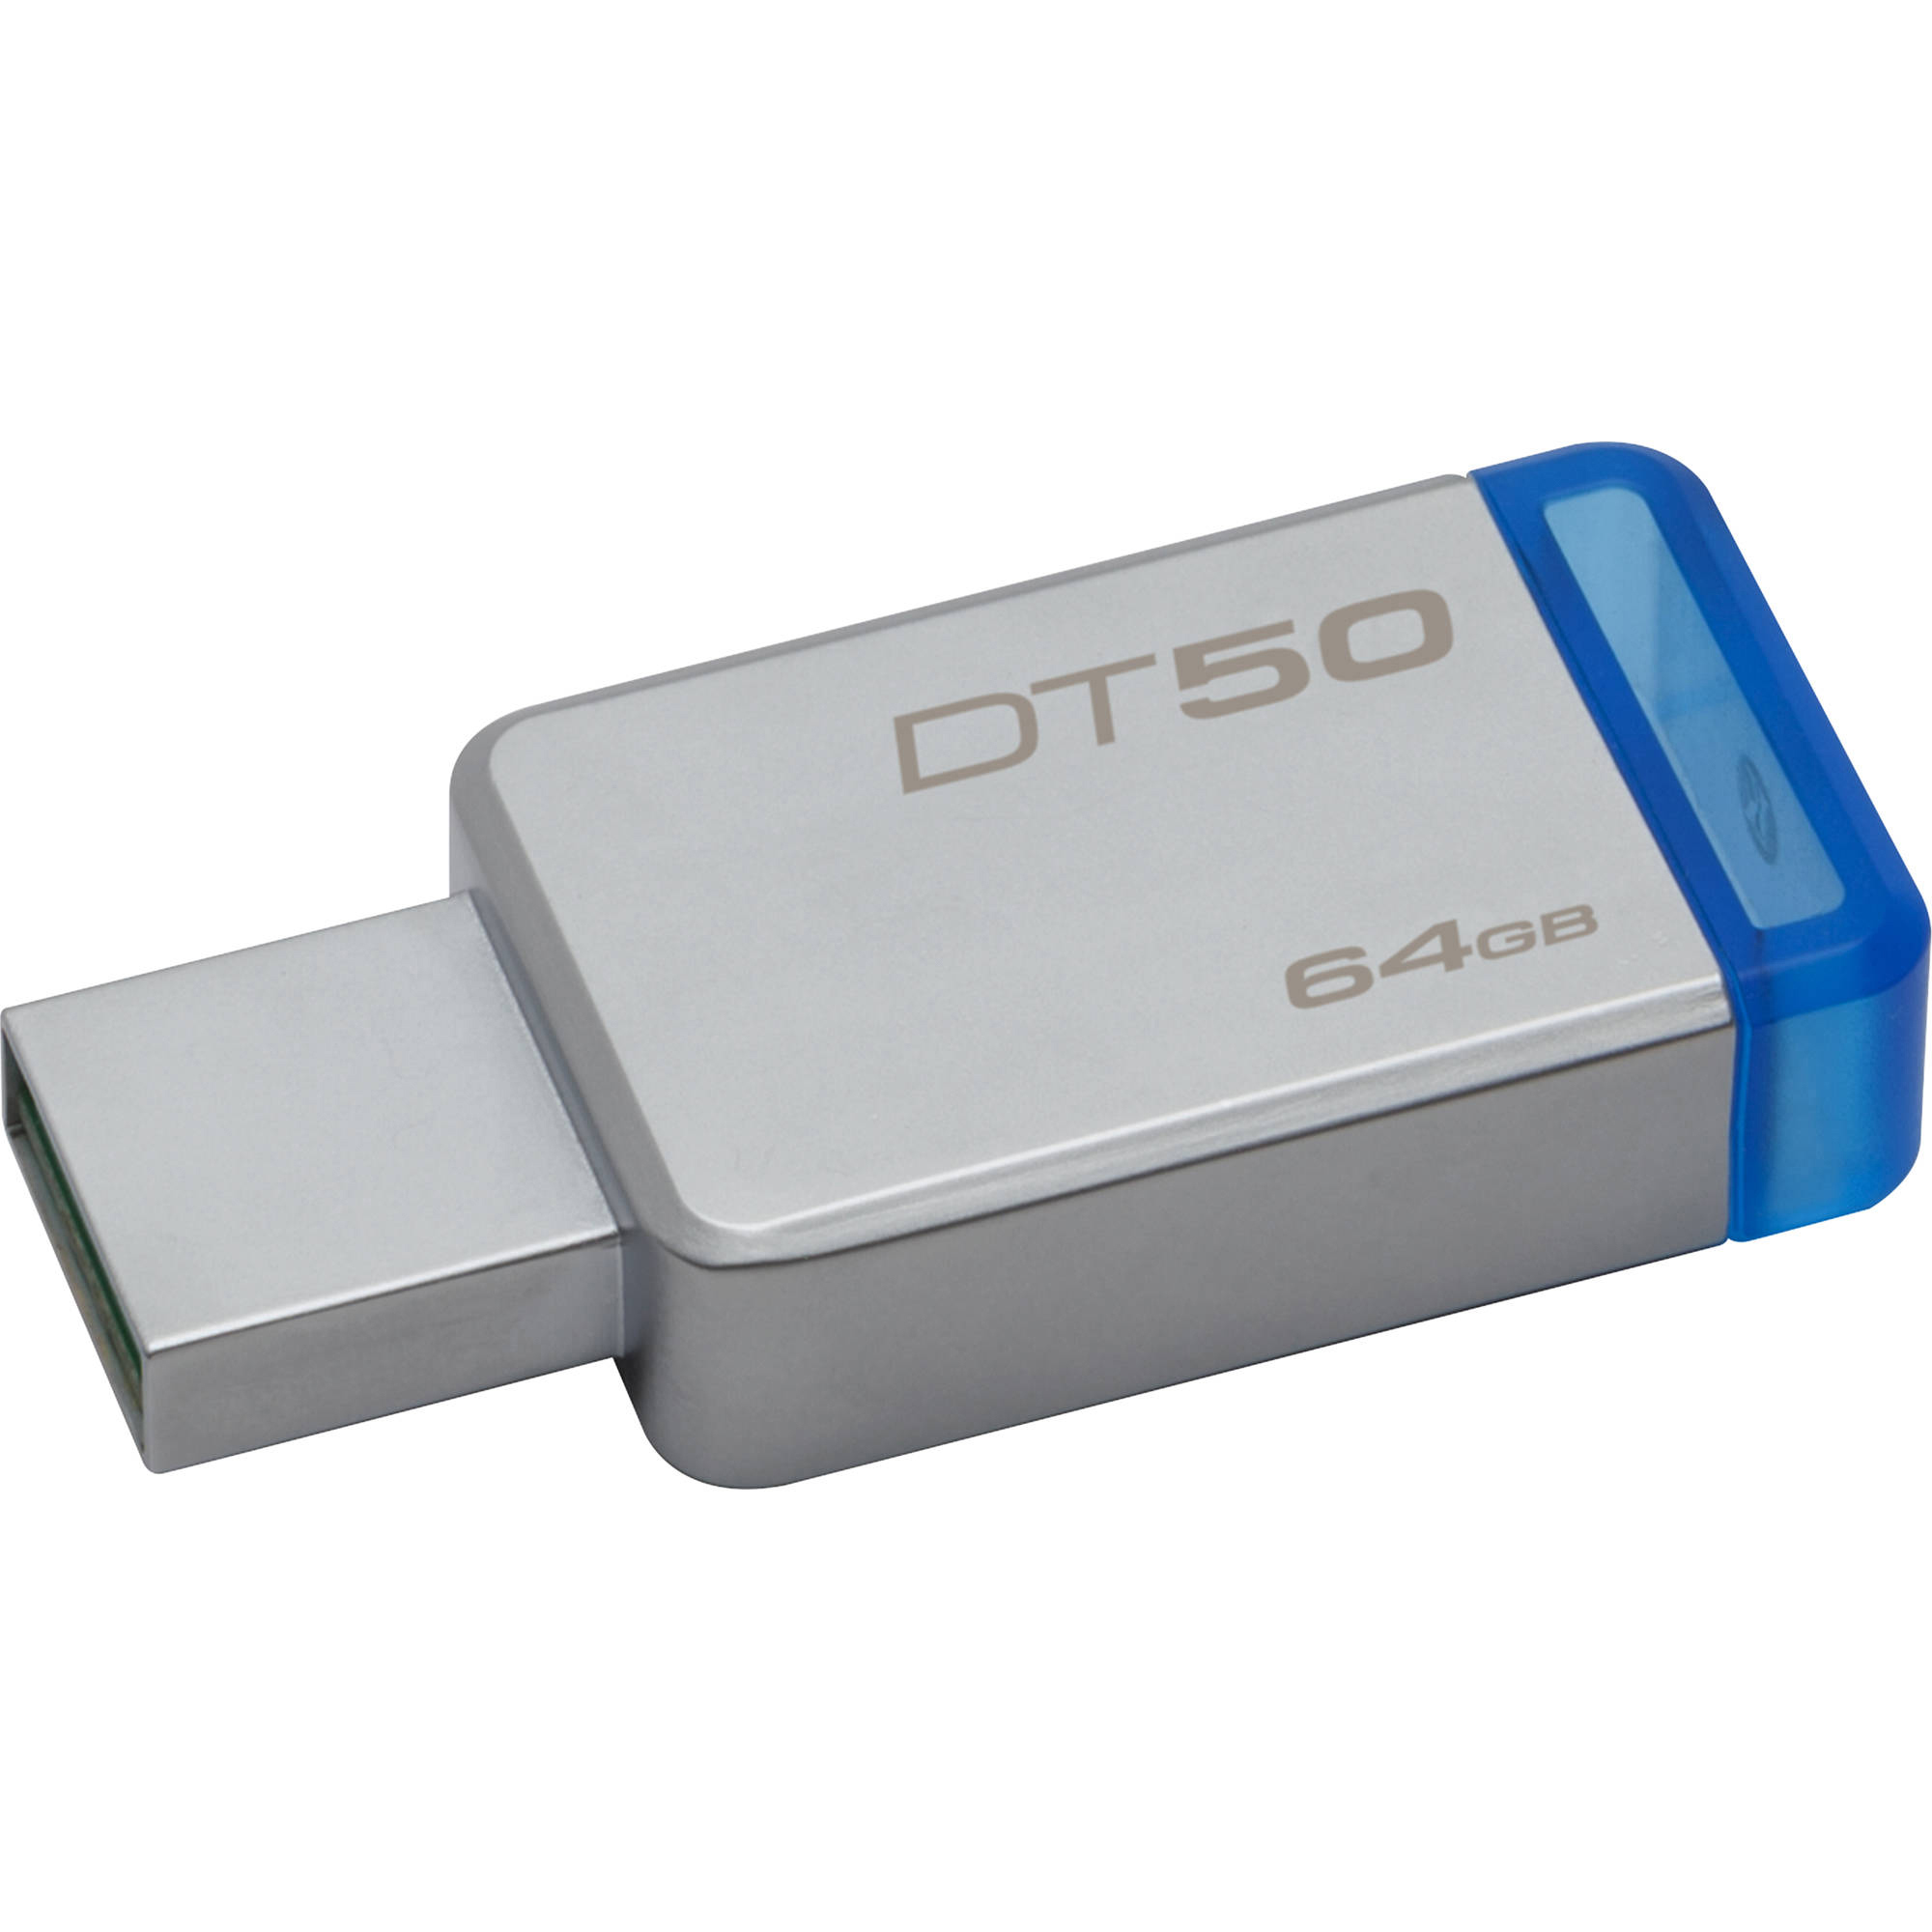 Original Kingston DataTraveler 50 64GB USB 3.0 Flash Drive (DT50/64GB)